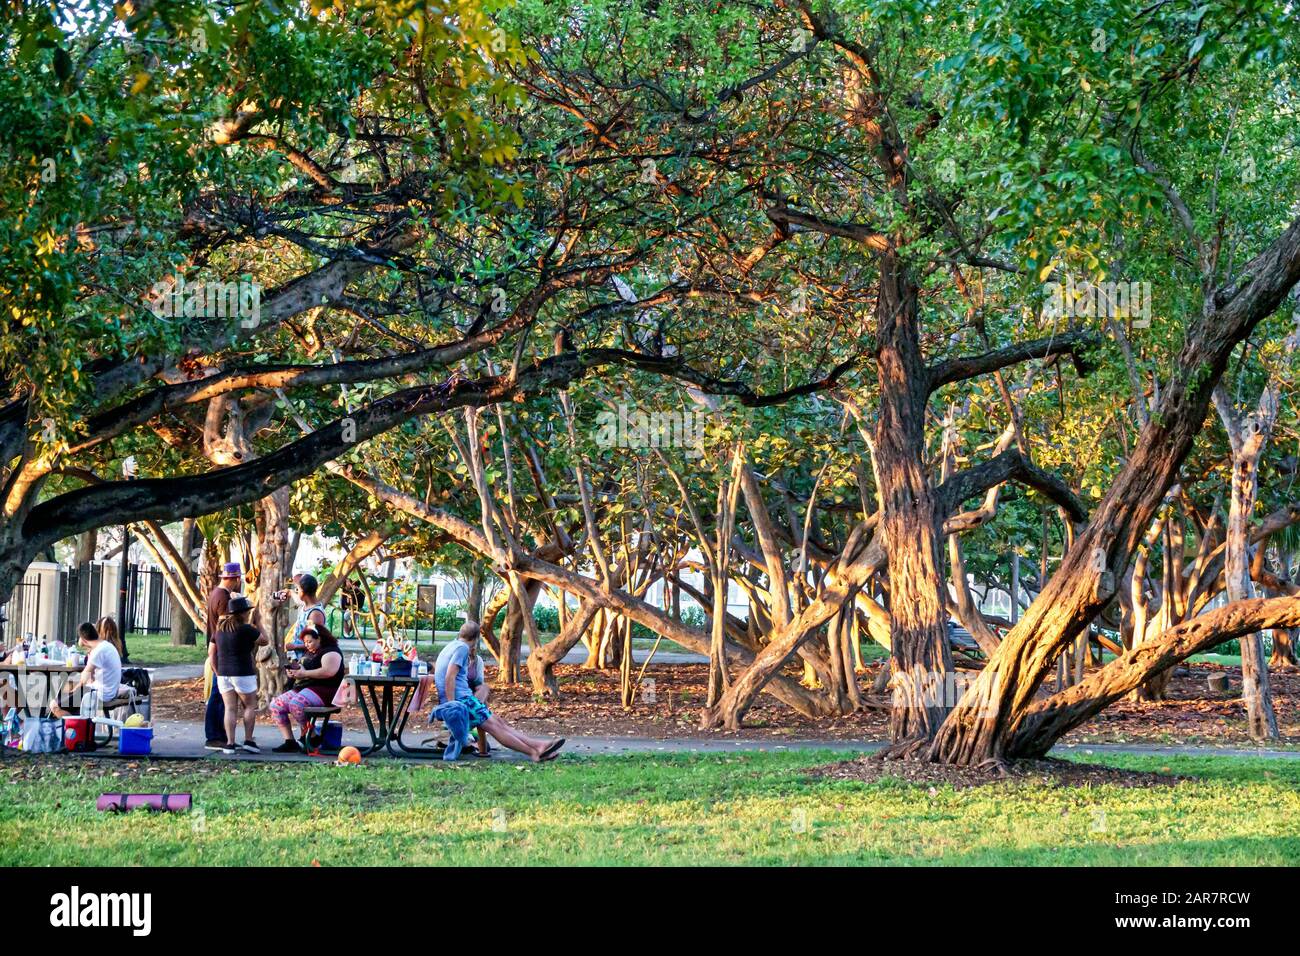 Miami Beach Florida,North Shore Park,picnic tables table,family,trees,outdoor recreation,FL191231180 Stock Photo